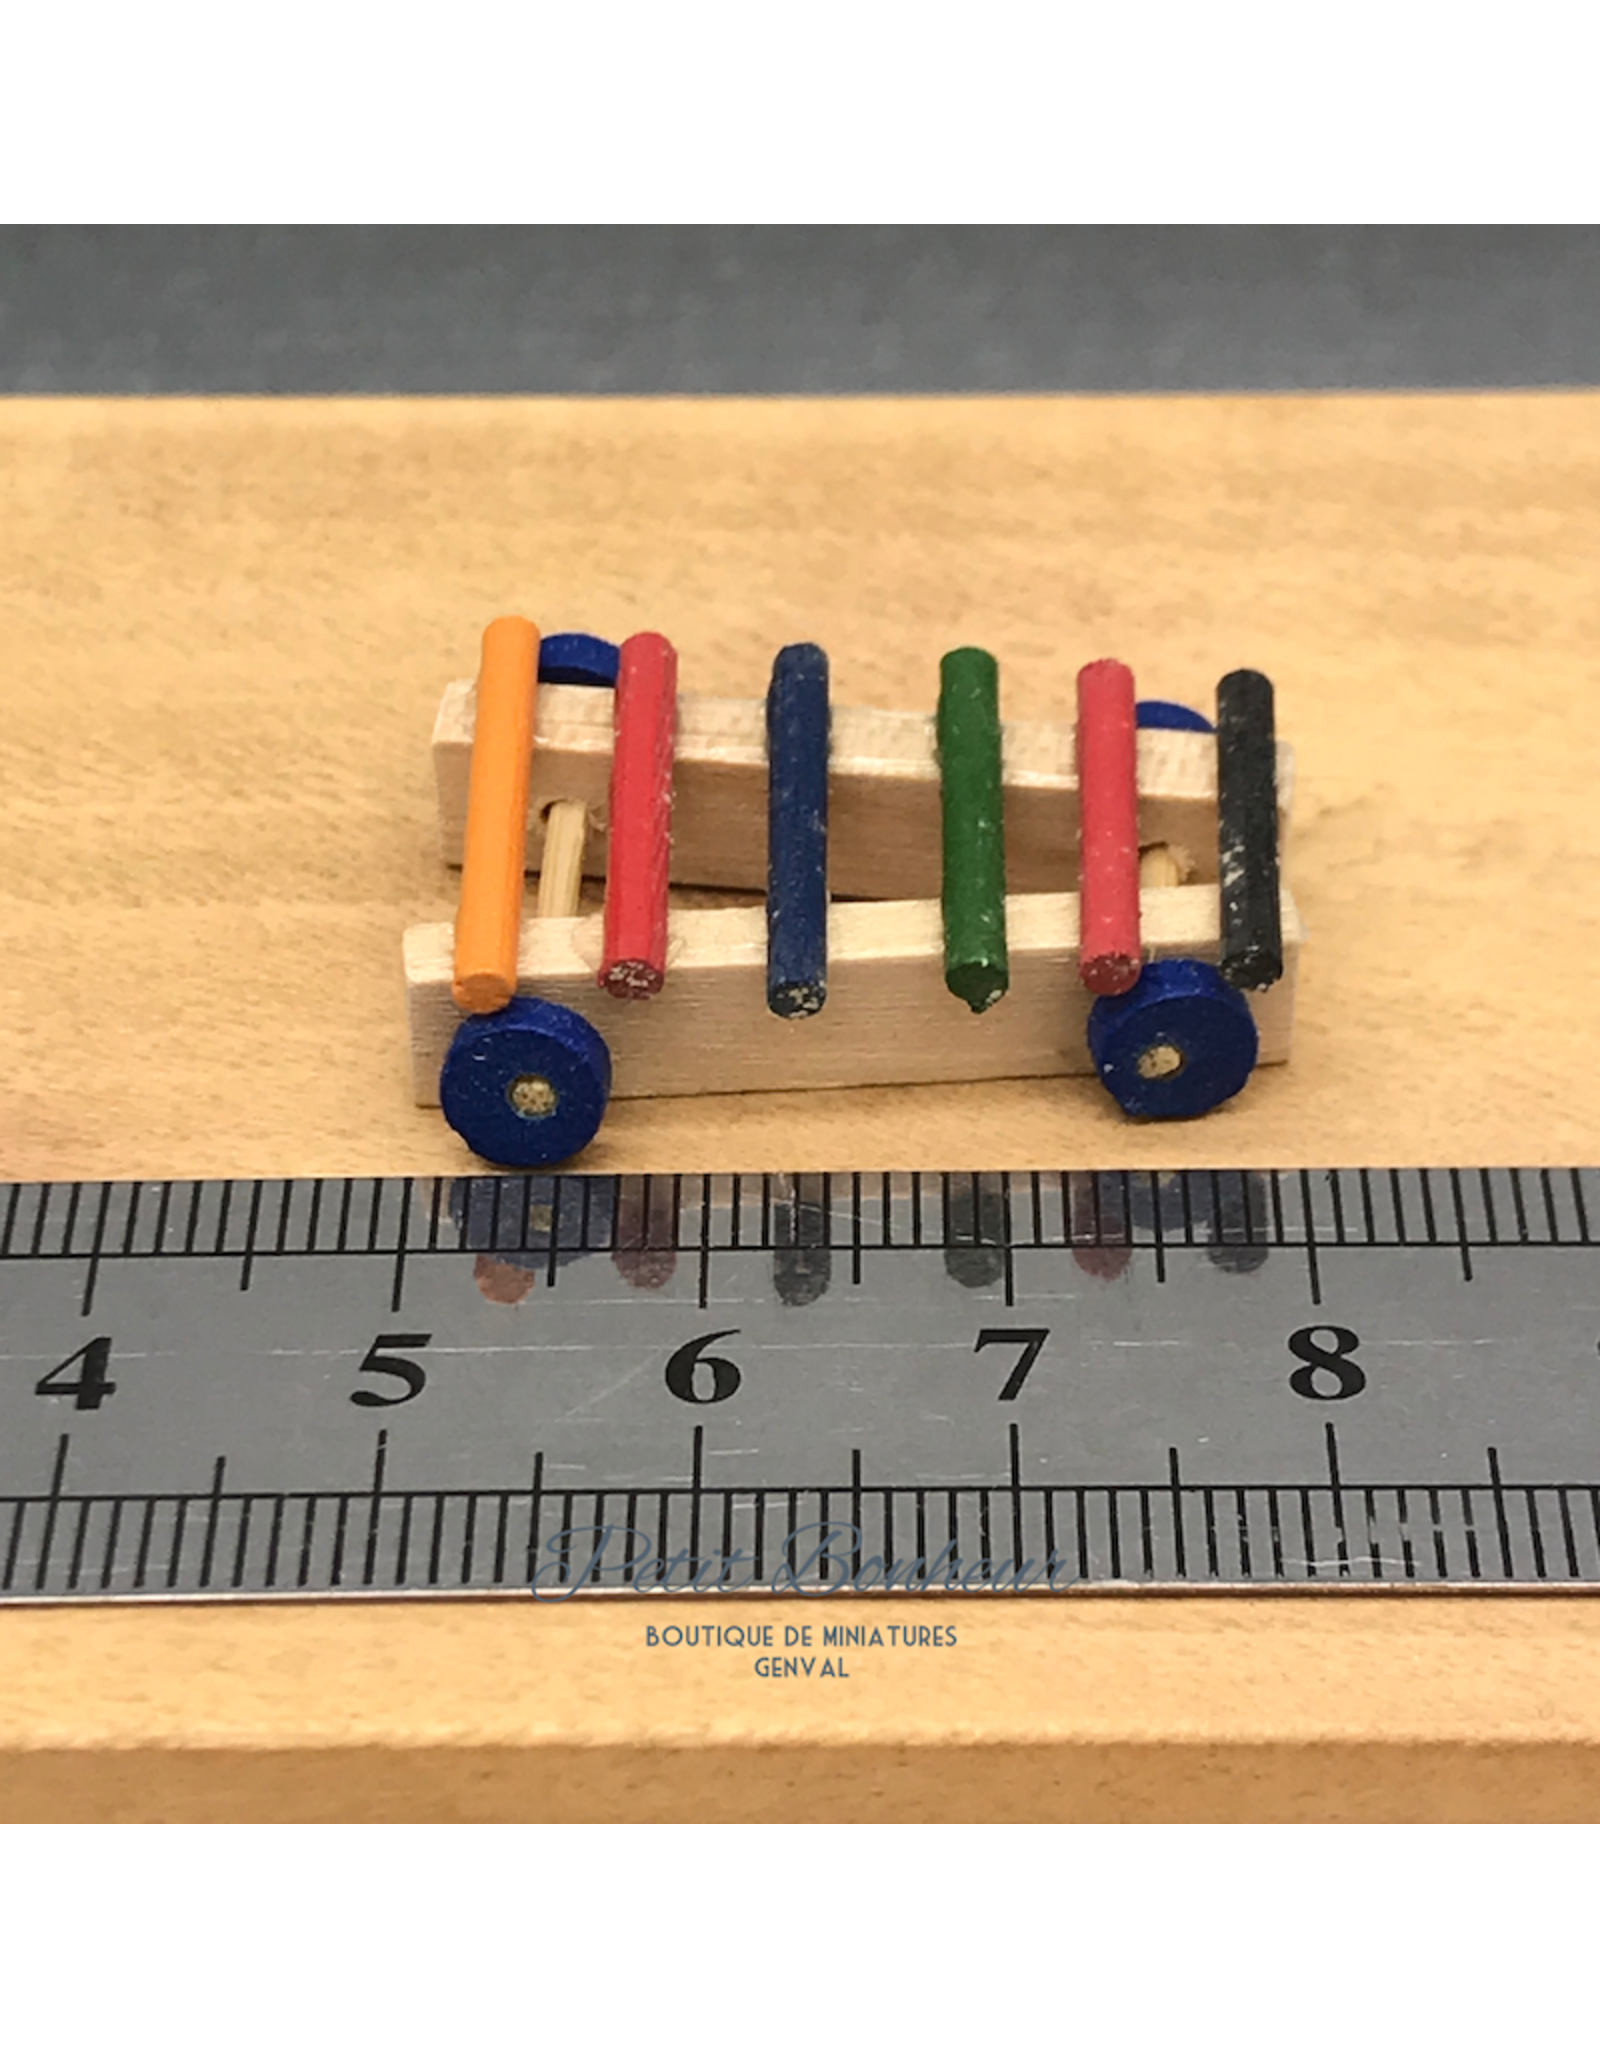 Xylophone miniature 1:12